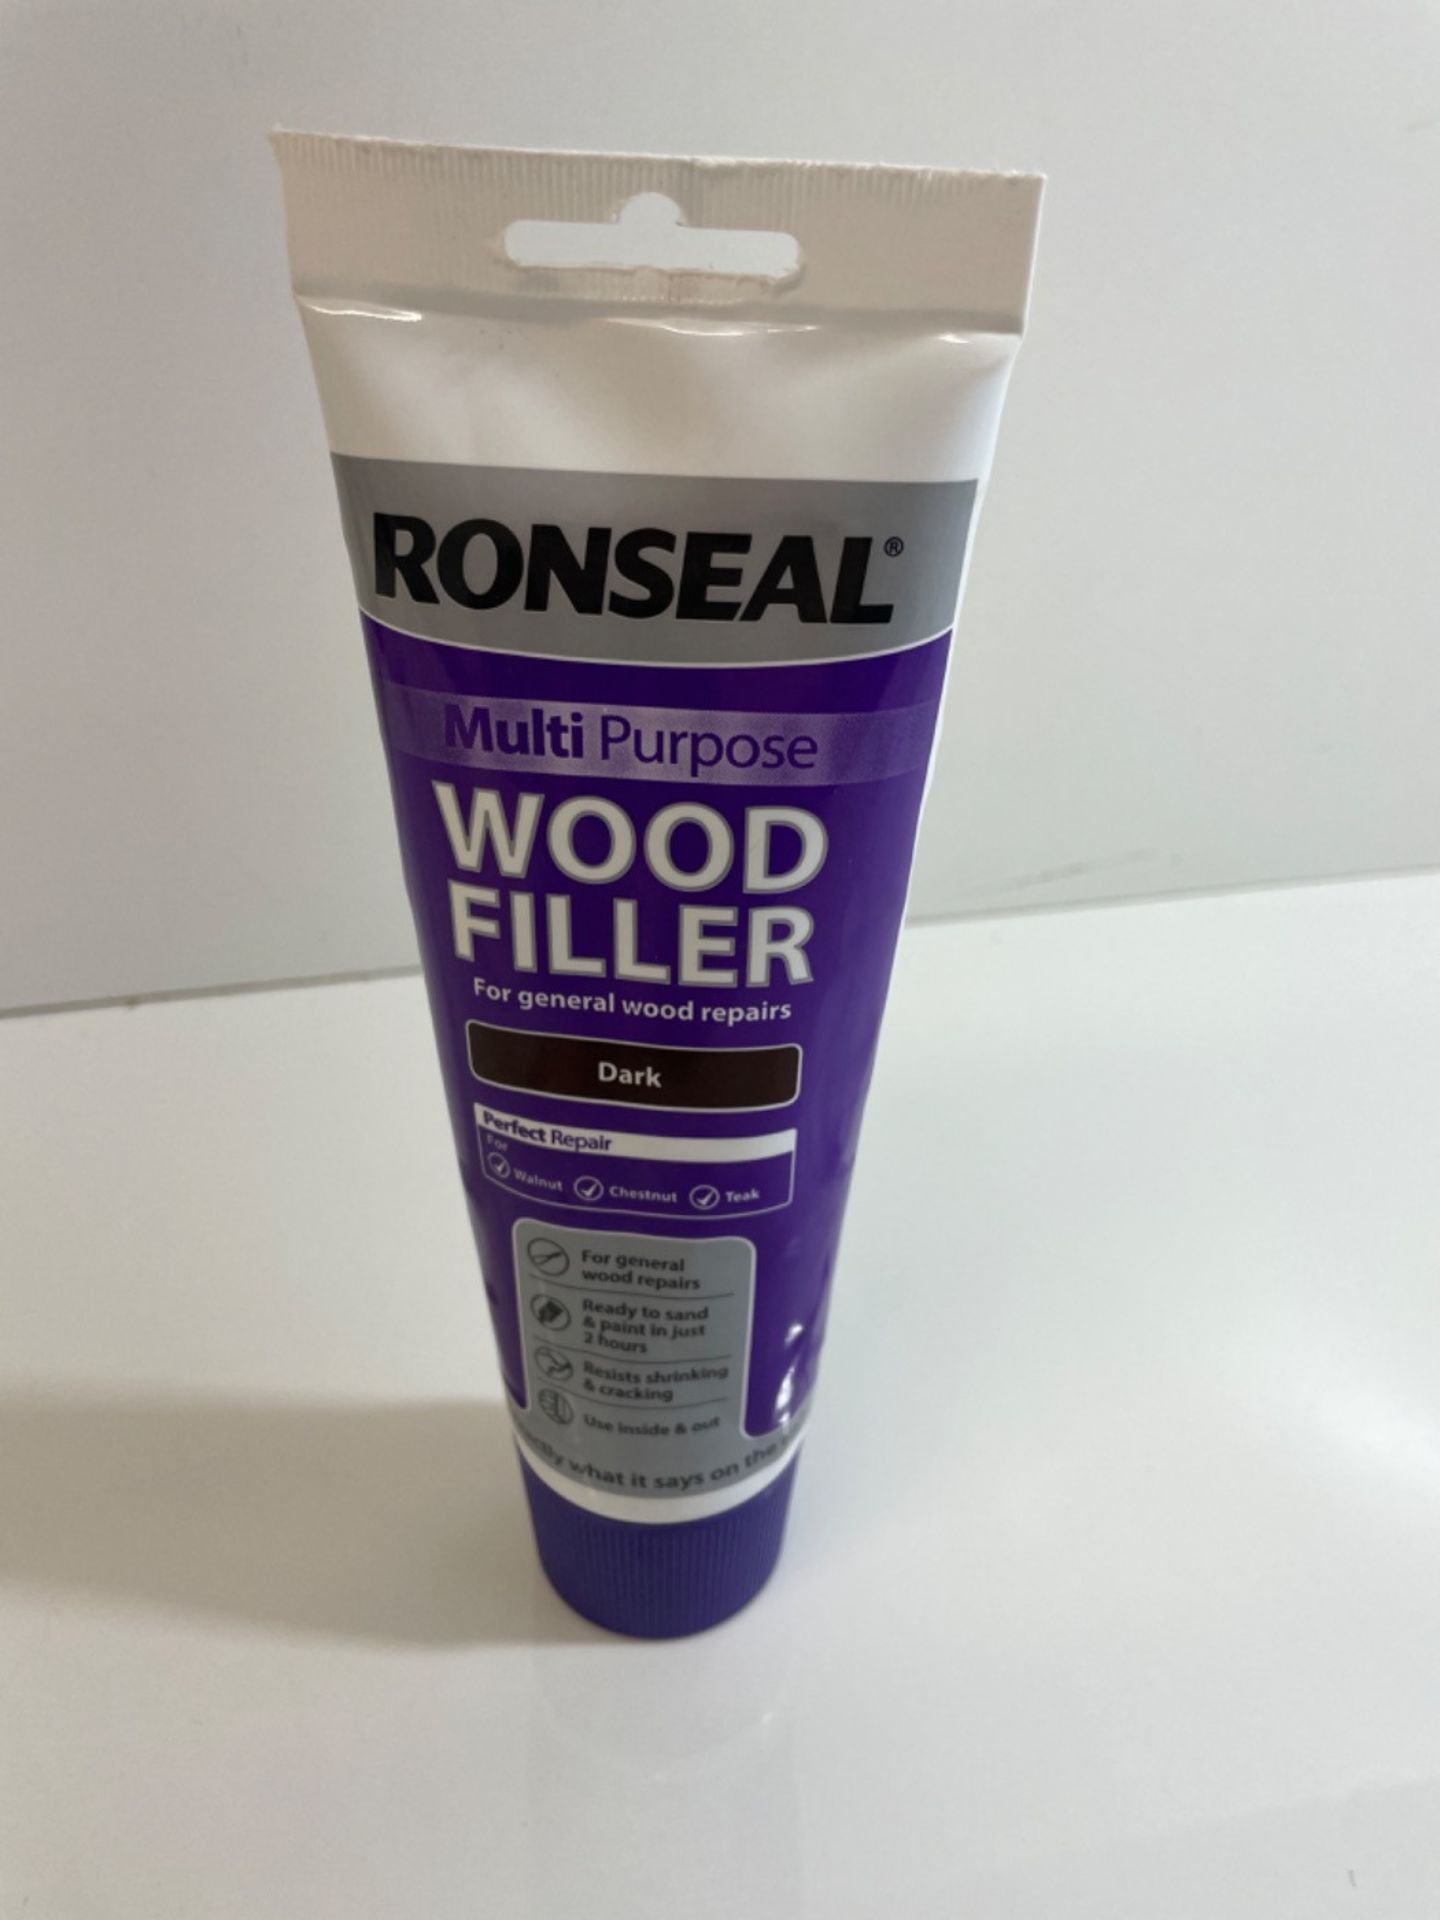 Ronseal MPWFD325G 325g Multi-Purpose Wood Filler Tube - Dark - Image 3 of 3